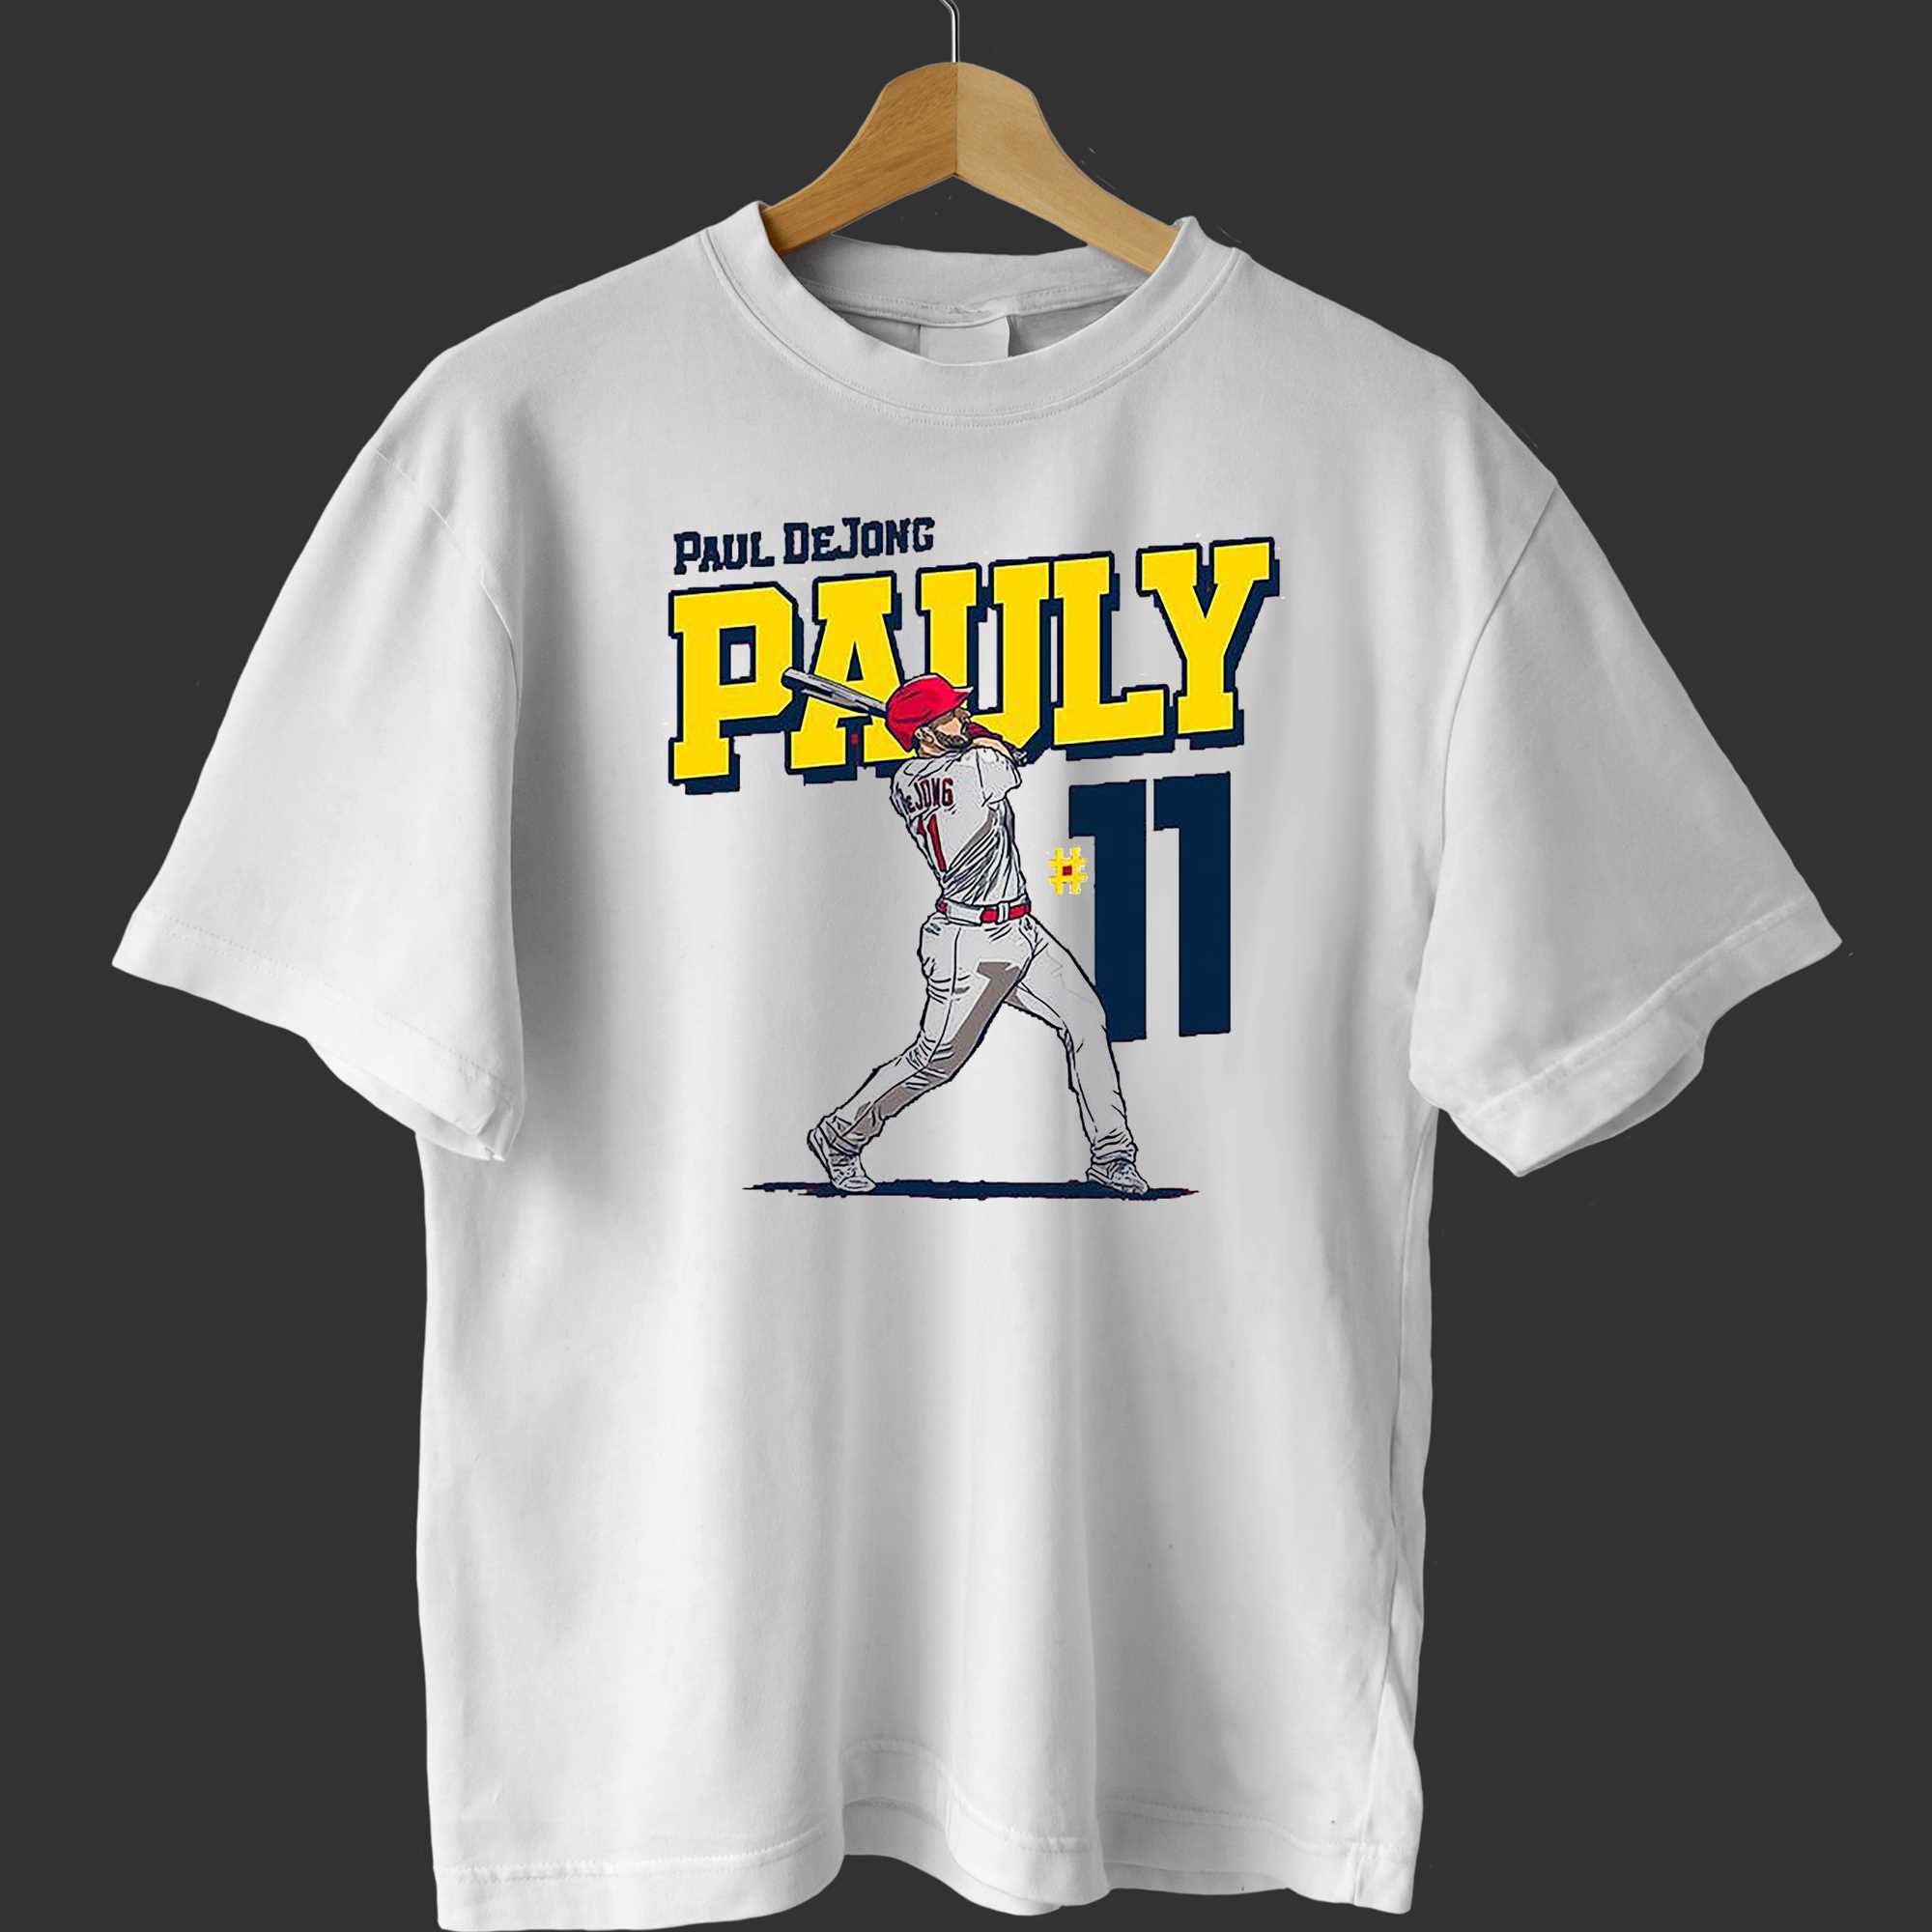 Pauly Paul Dejong St Louis Cardinals Shirt